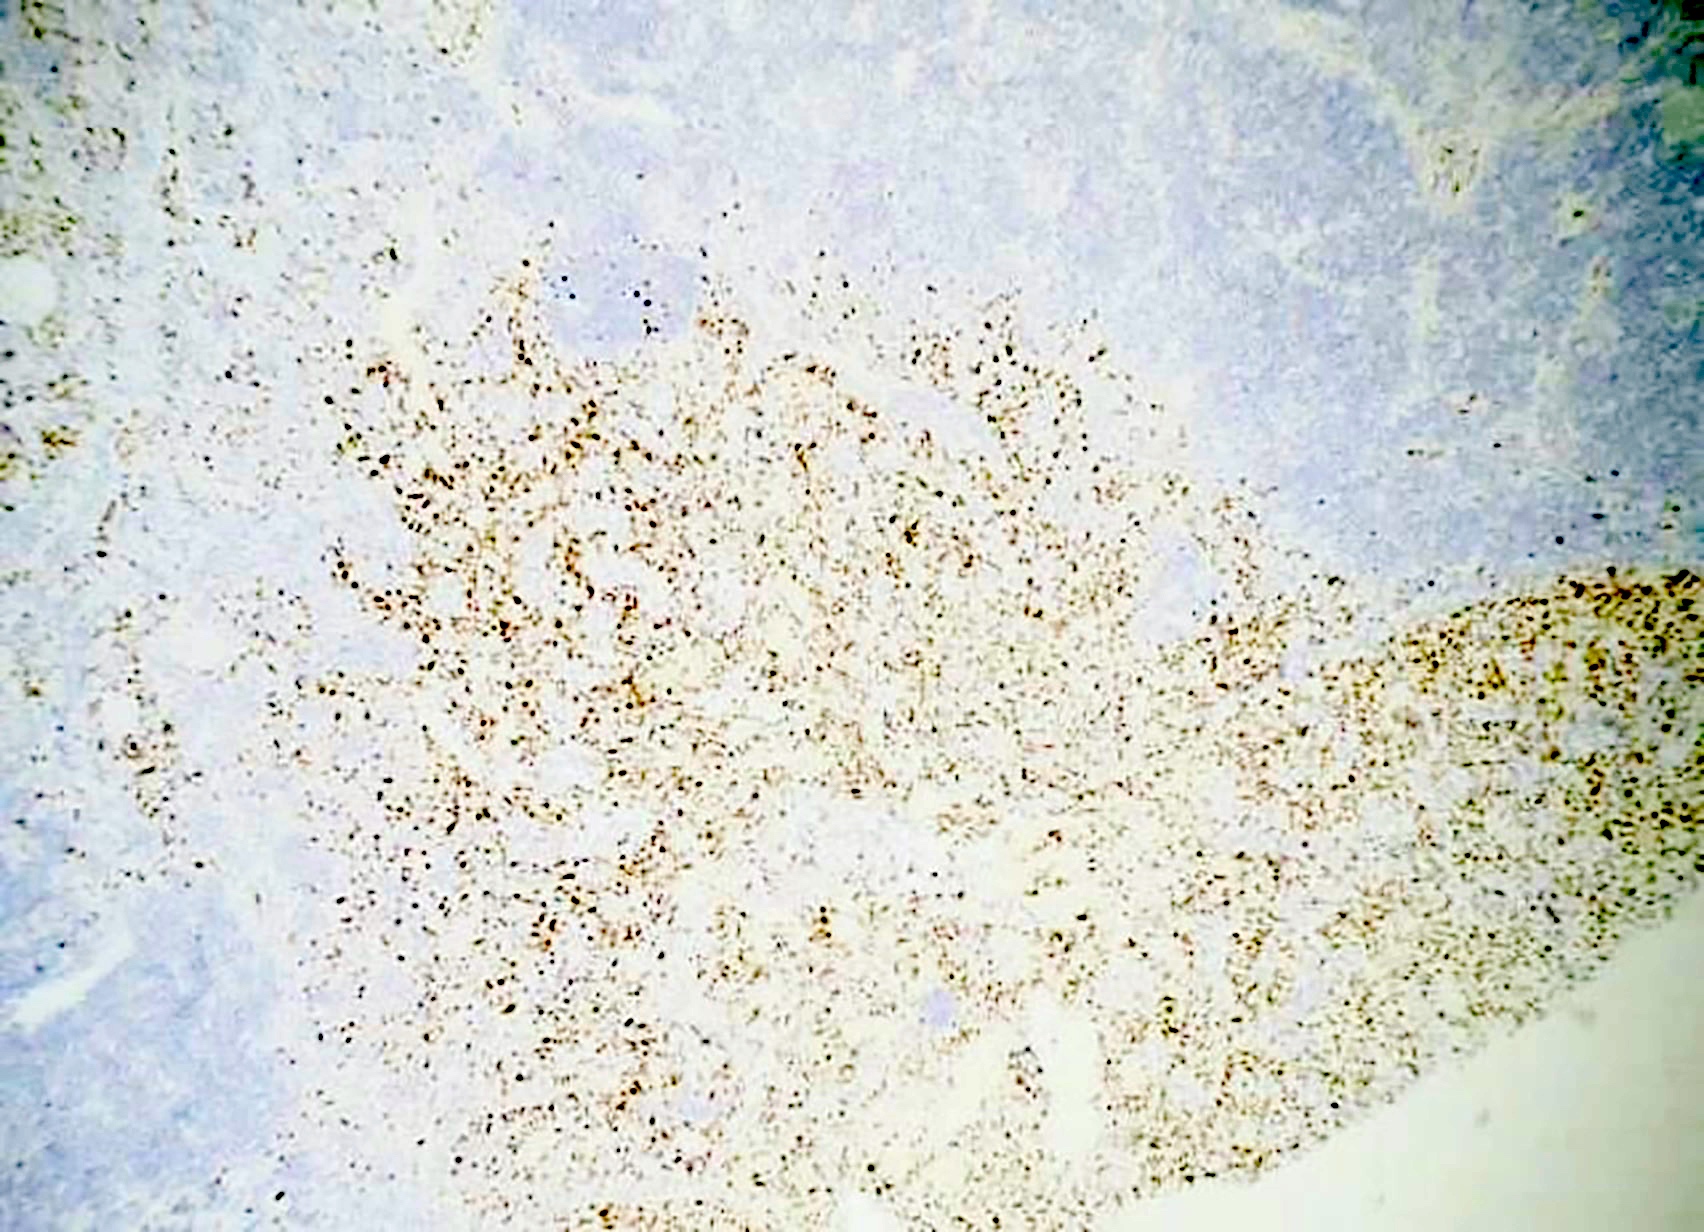 Kaposi sarcoma in a case of HHV8 MCD, HHV8